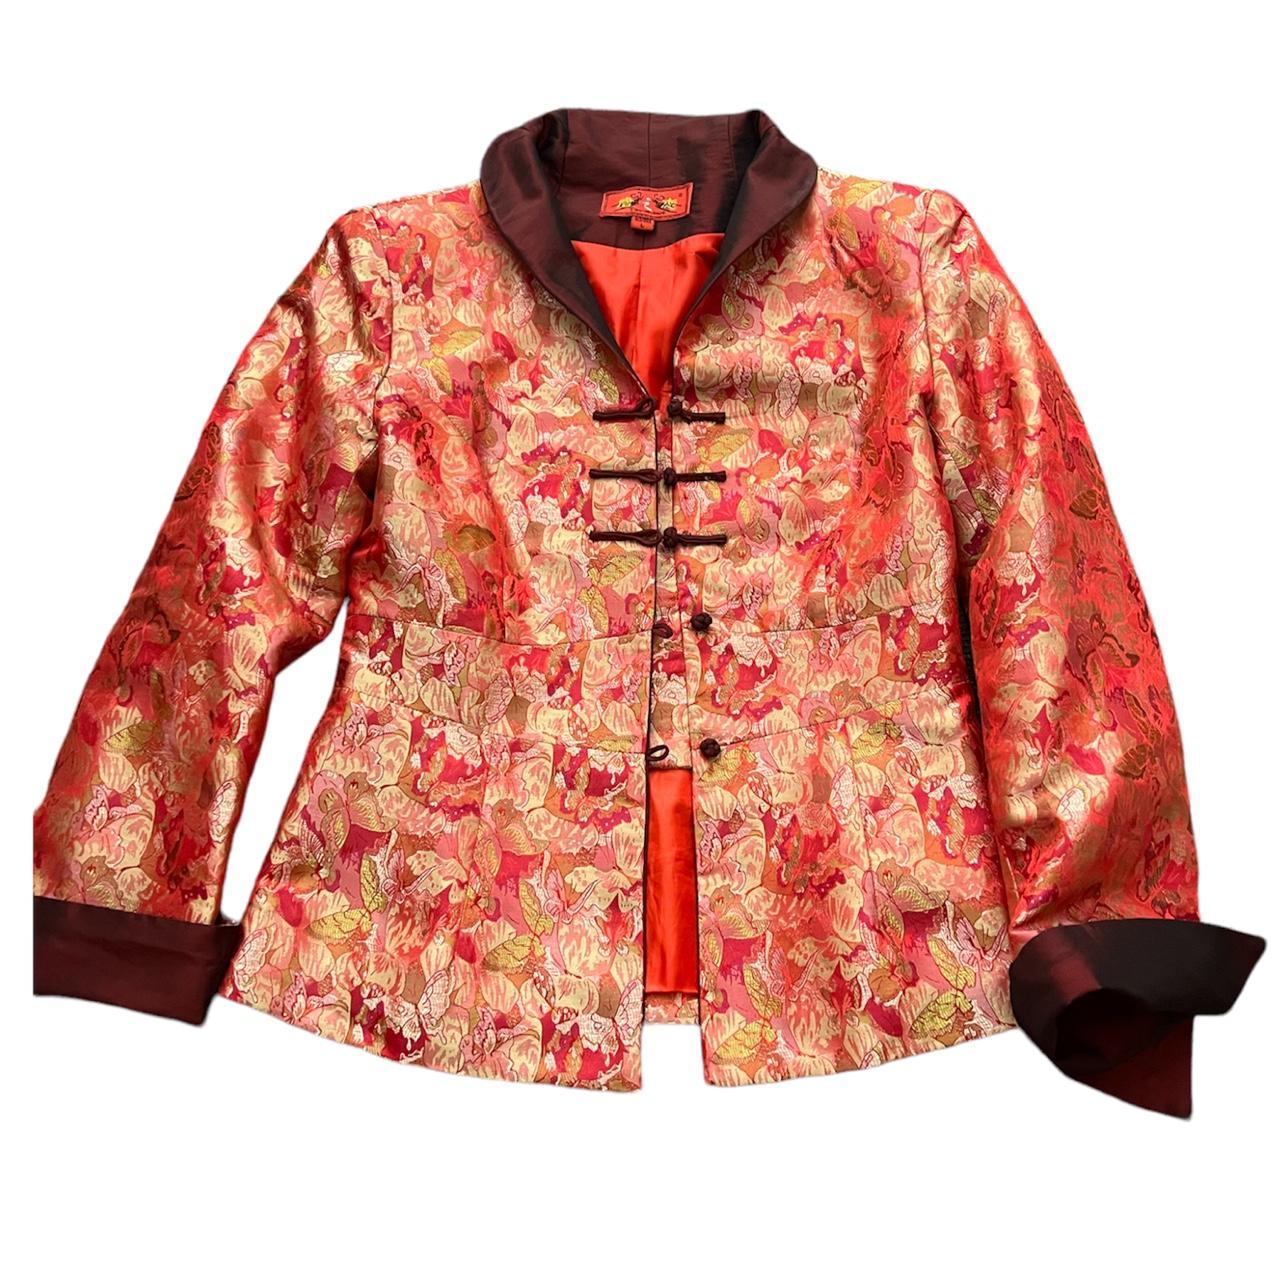 Awesome oriental print vintage coat, says size large... - Depop